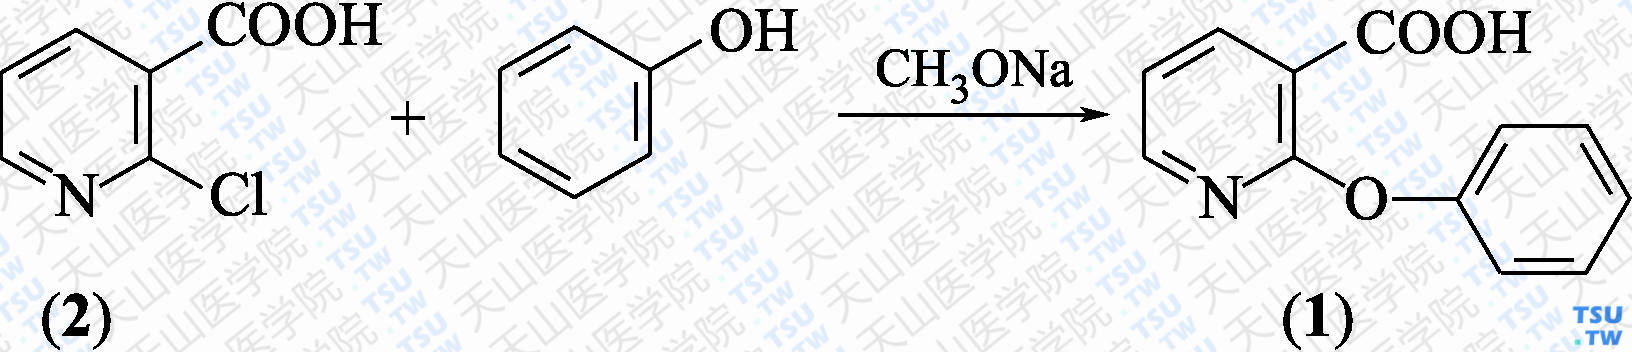 2-苯氧基尼克酸（分子式：C<sub>12</sub>H<sub>9</sub>NO<sub>3</sub>）的合成方法路线及其结构式